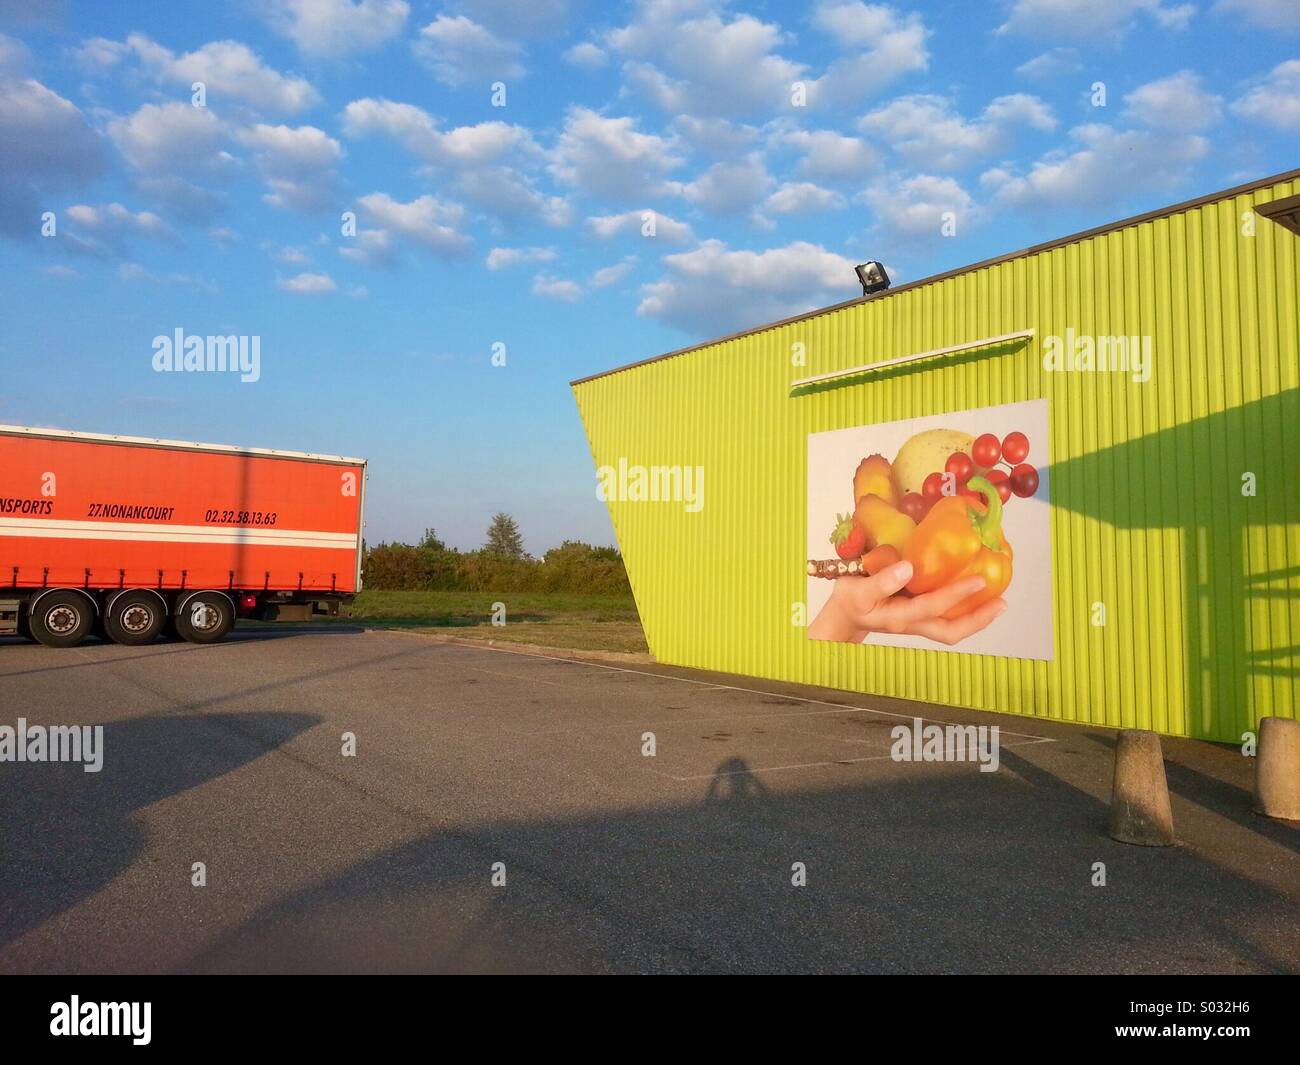 Supermarket - supermarcher - France Stock Photo